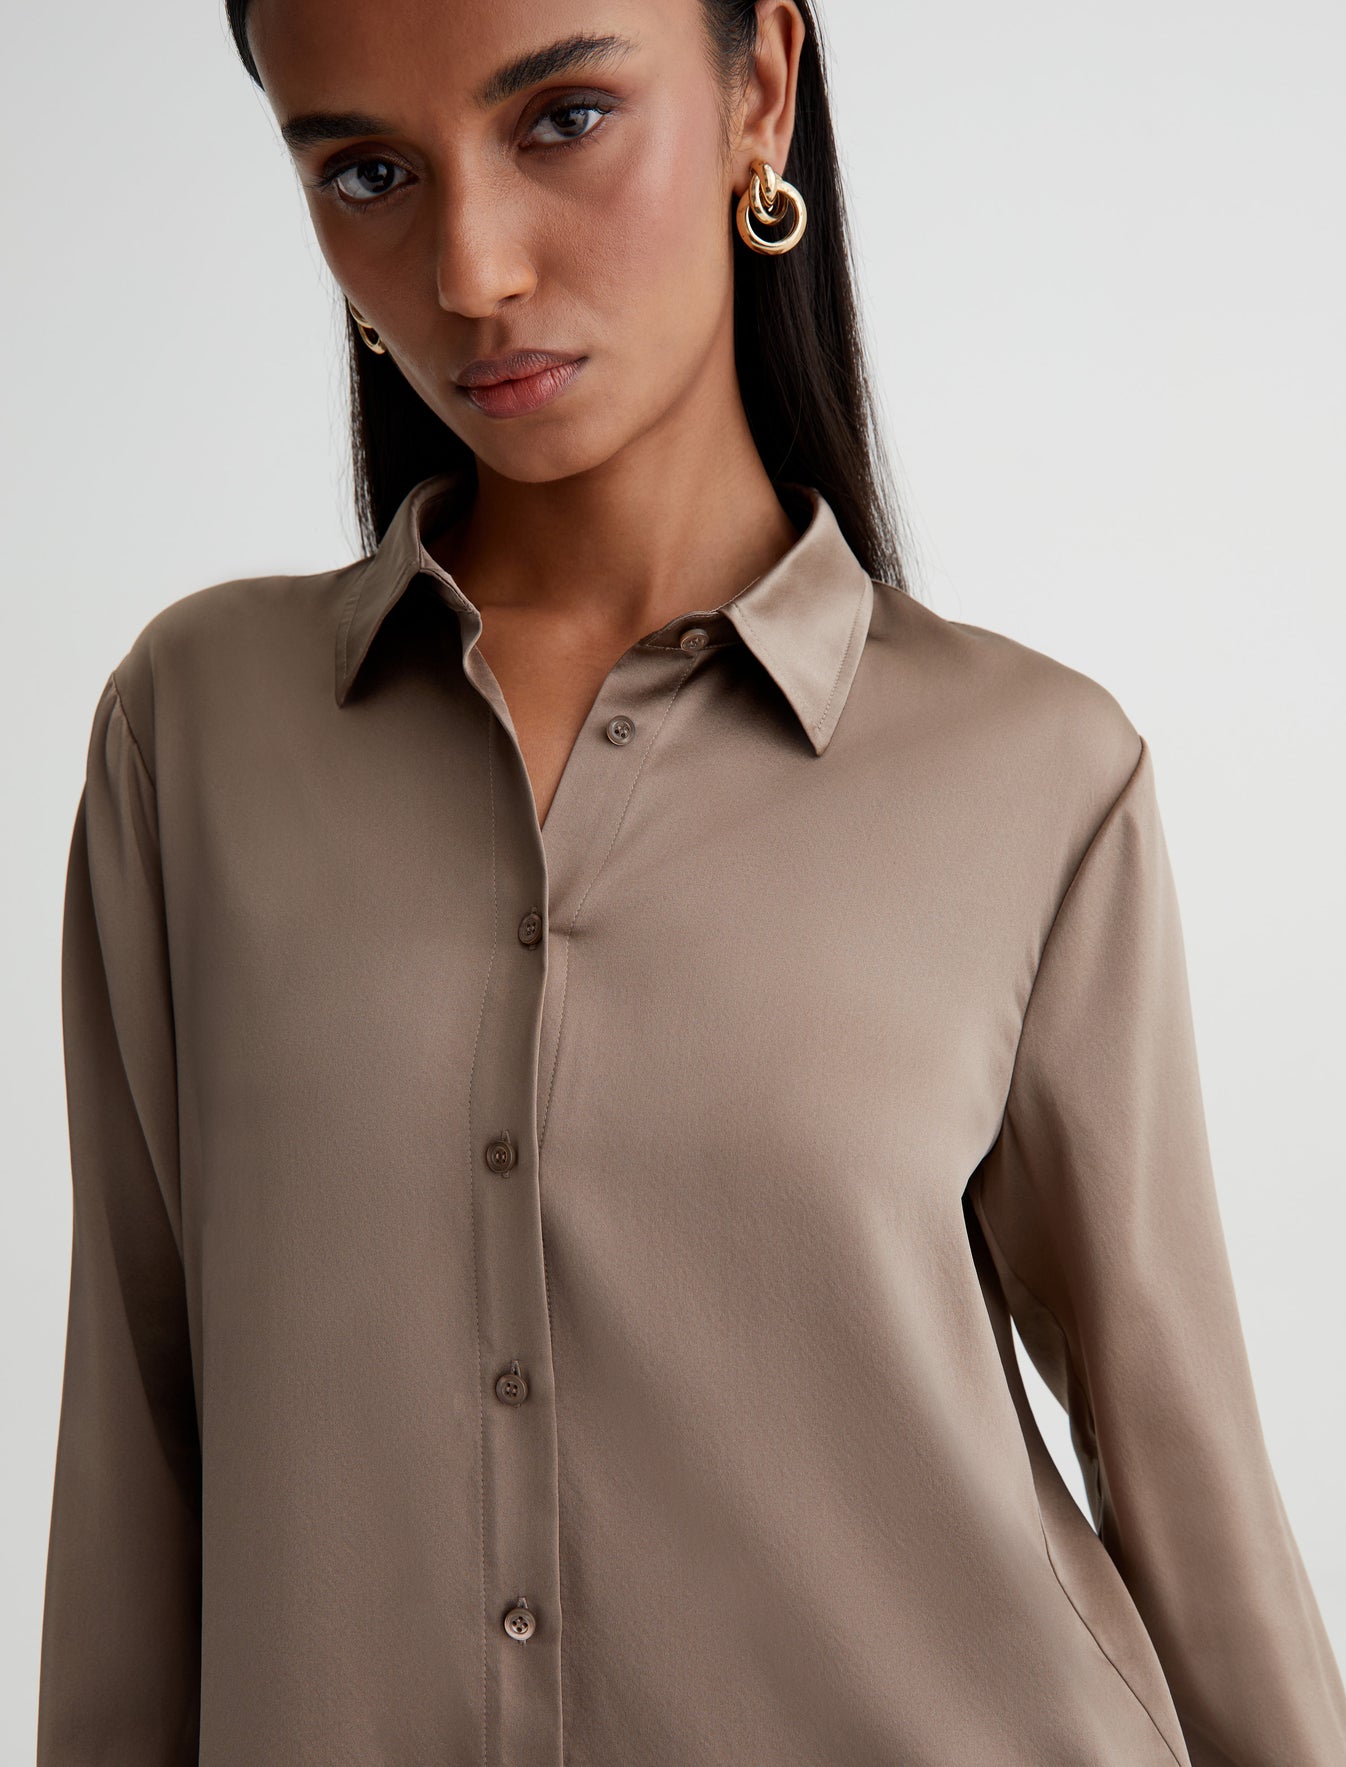 Shiela Brooklyn Taupe Relaxed Long Sleeve Button Up Shirt Women Top Photo 3